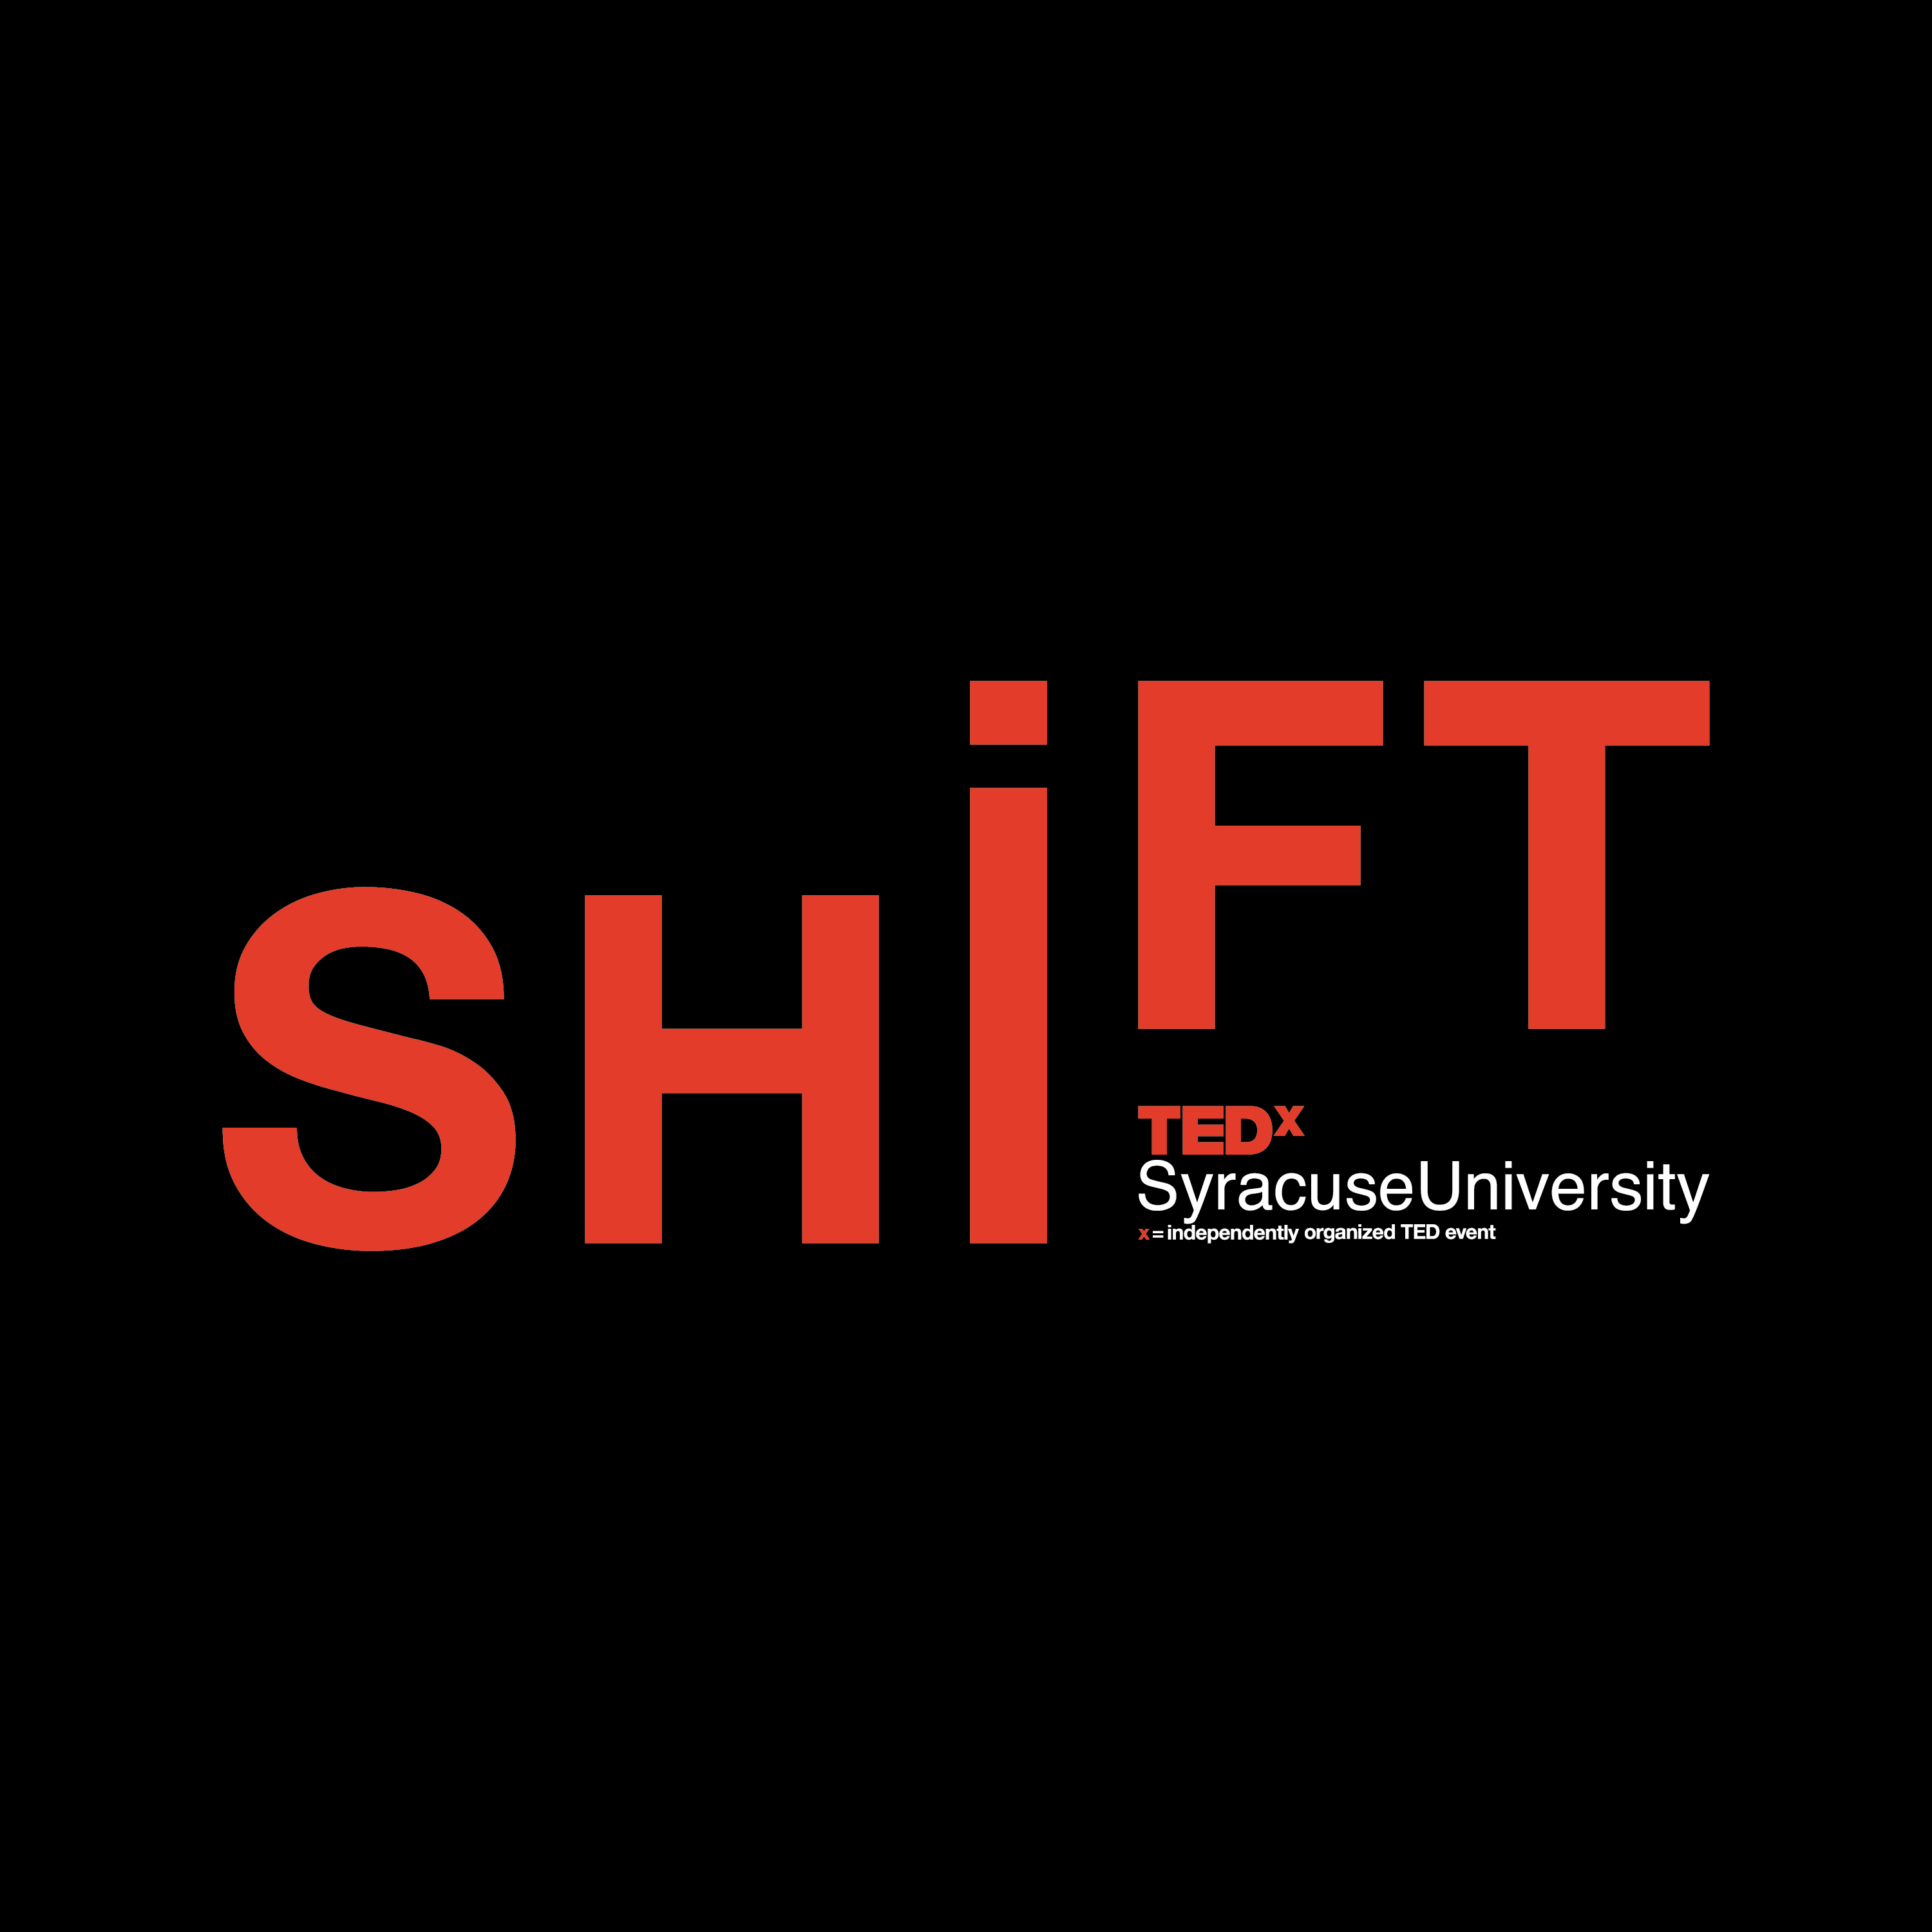 TEDx Syraucse University SHIFT logo